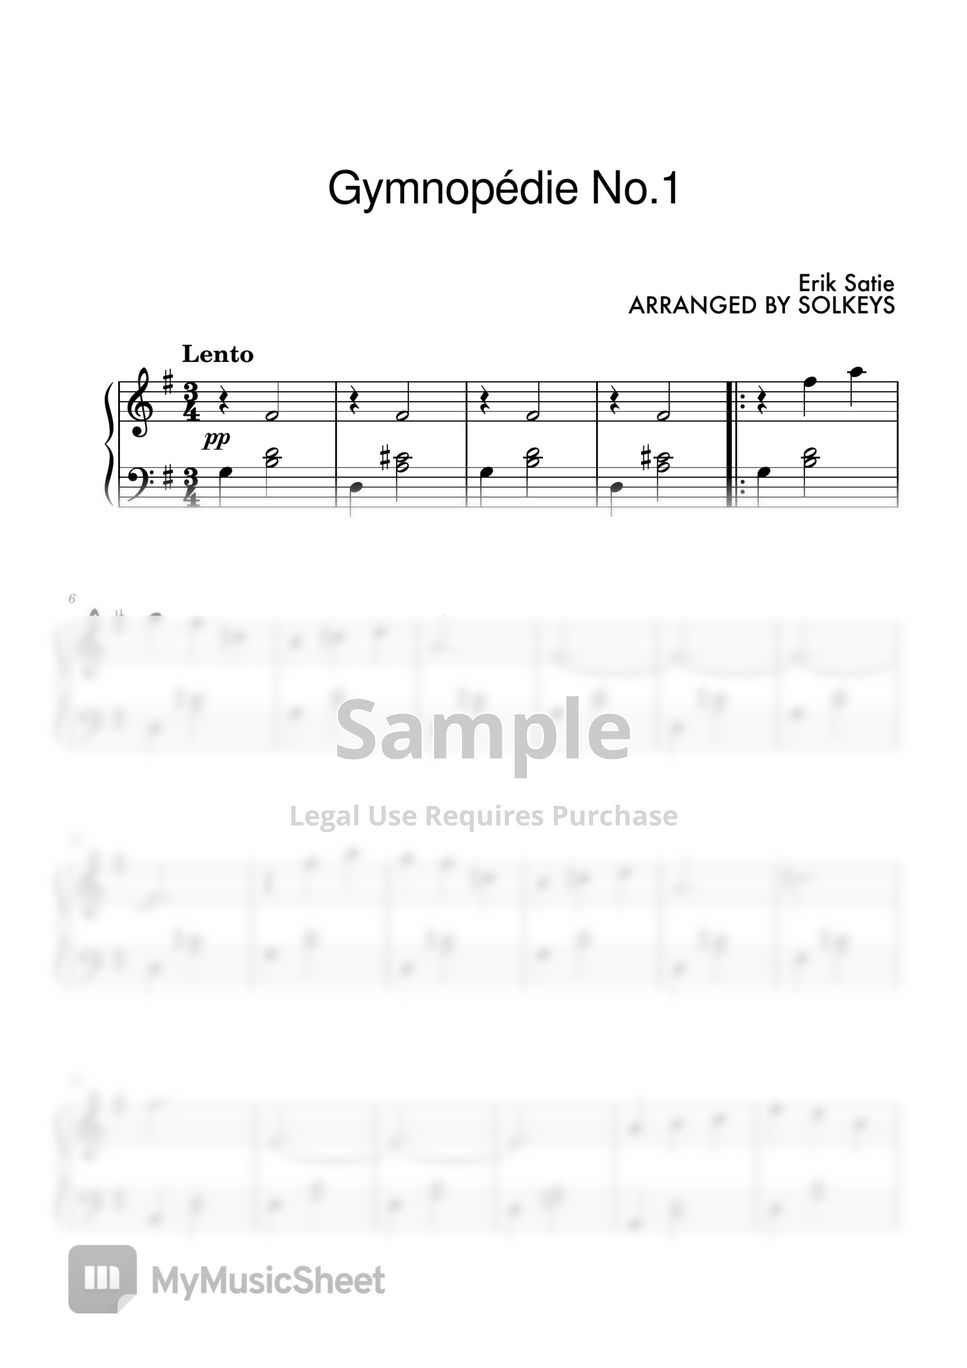 Erik Satie - Gymnopédie No.1 by SolKeys